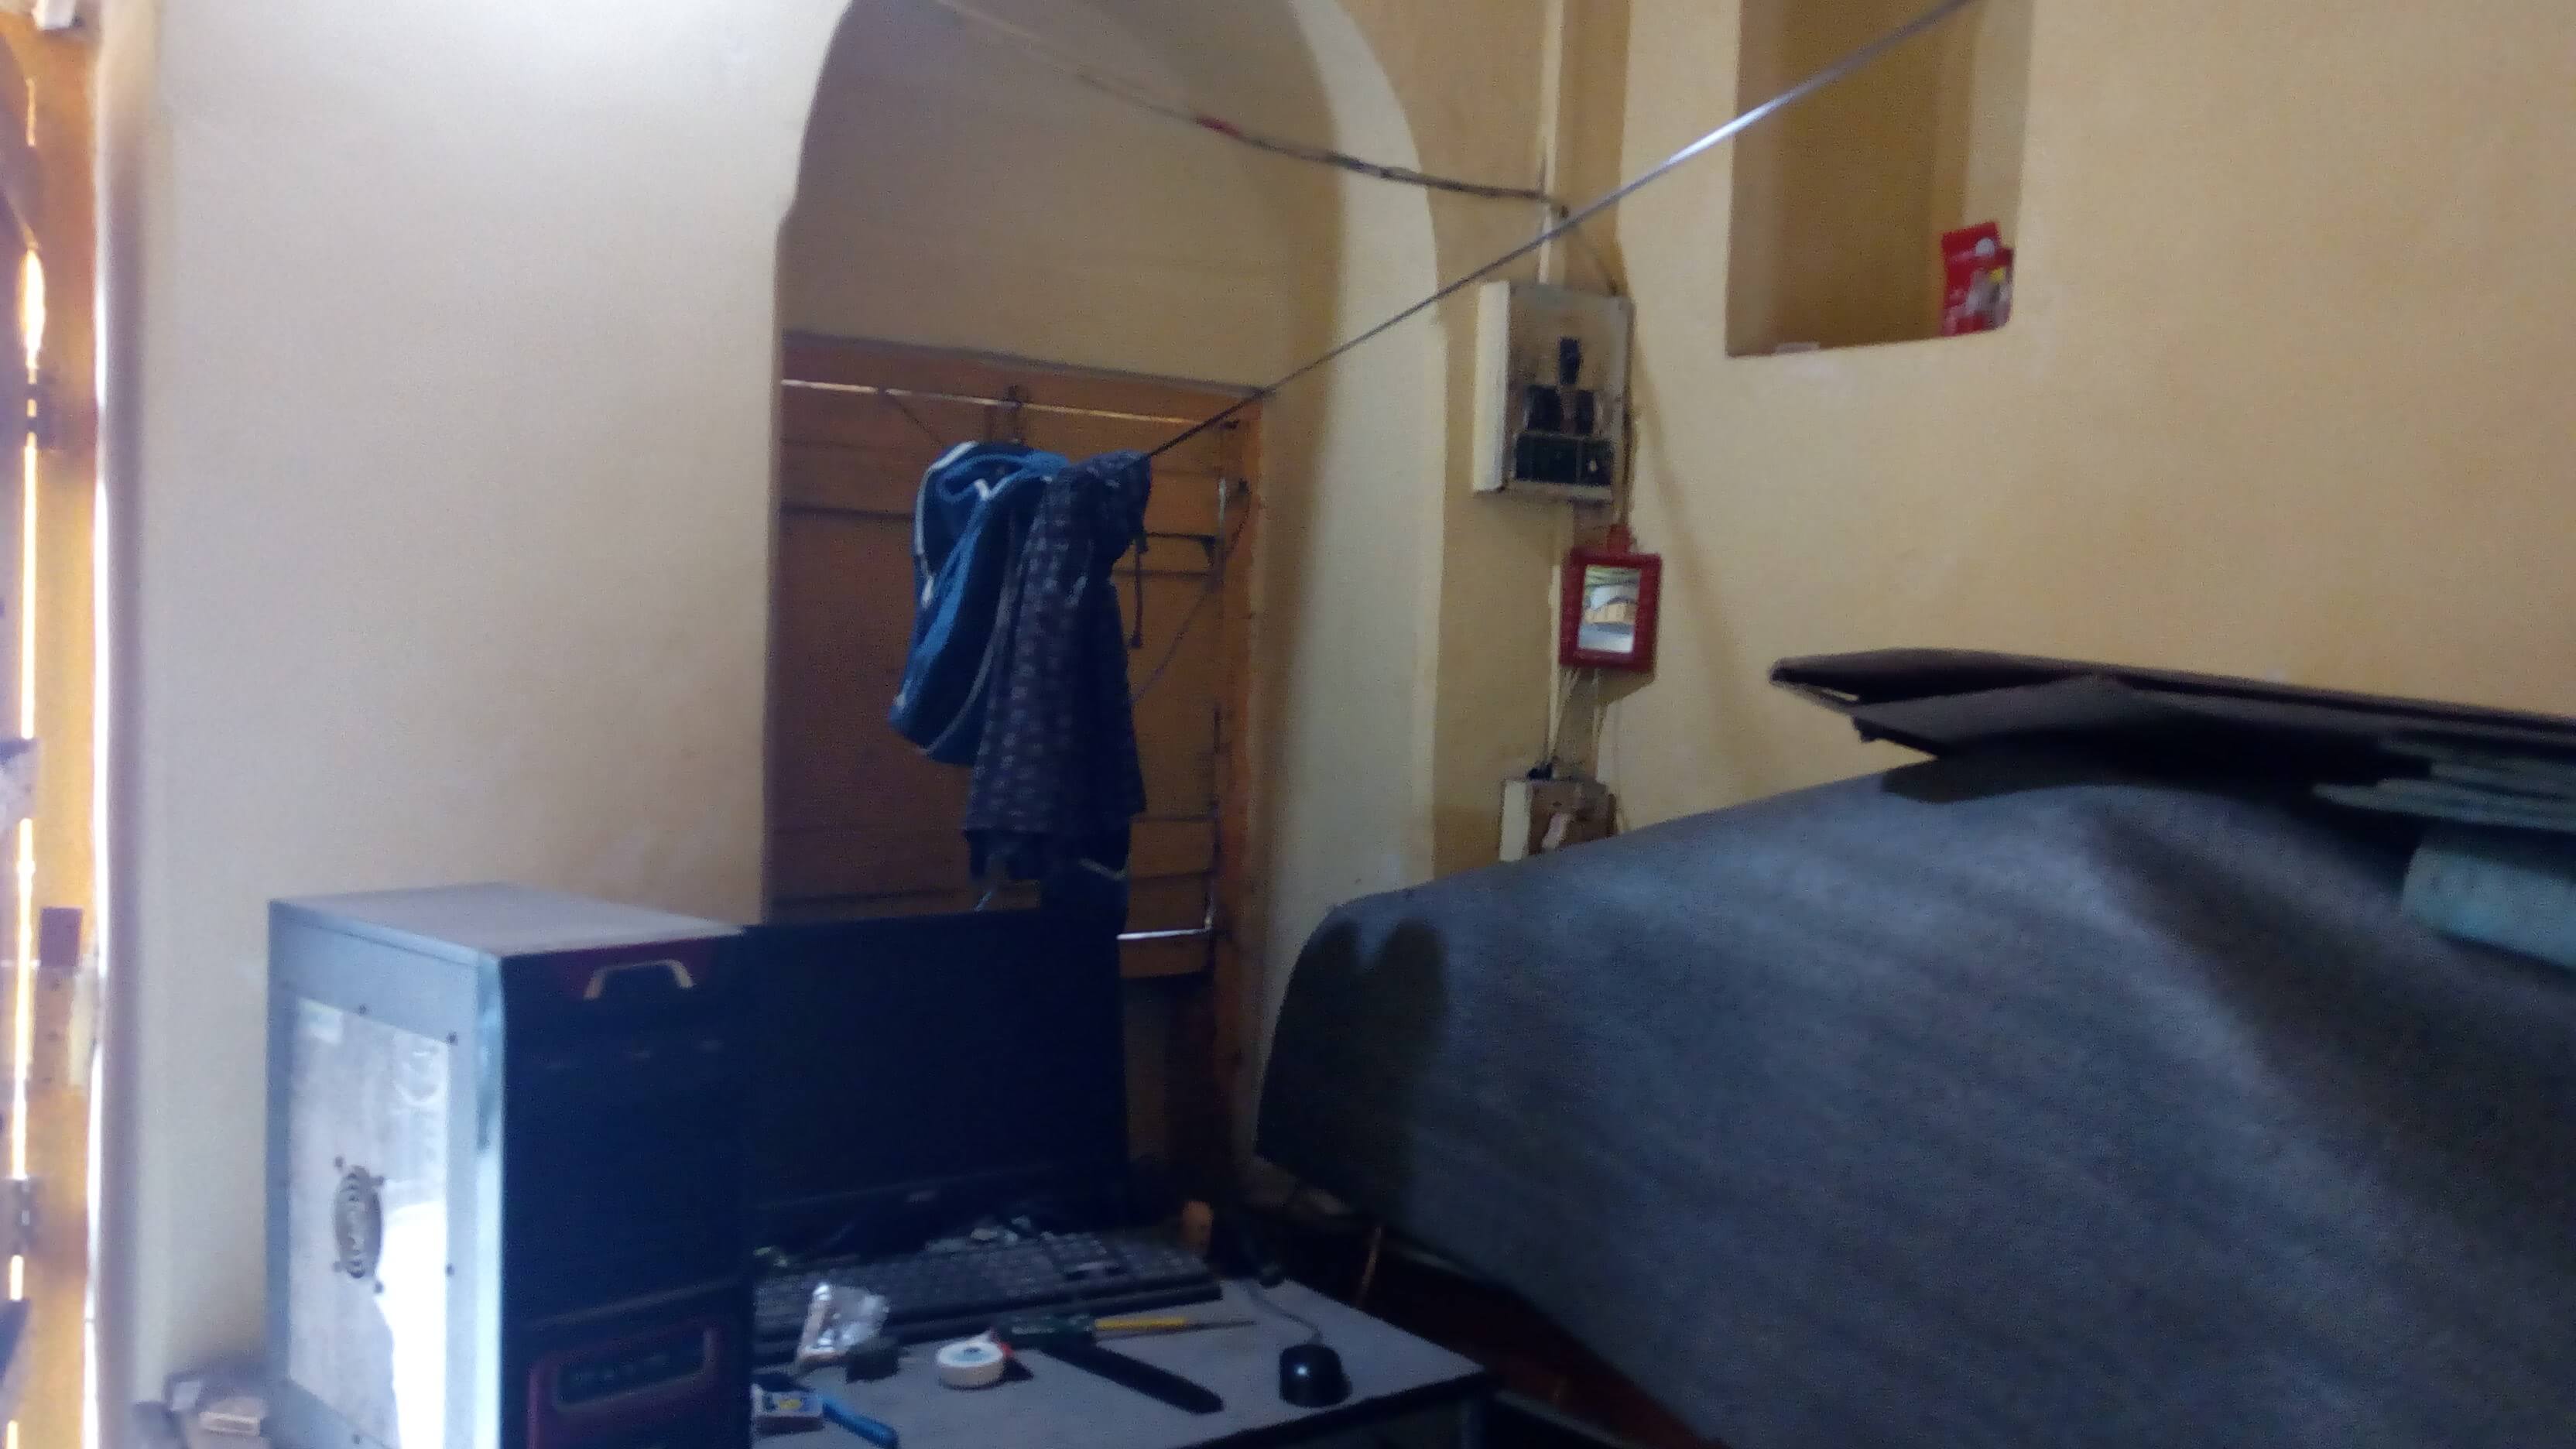 Office For Rent in Maniktala,Kolkata (Id:22274)